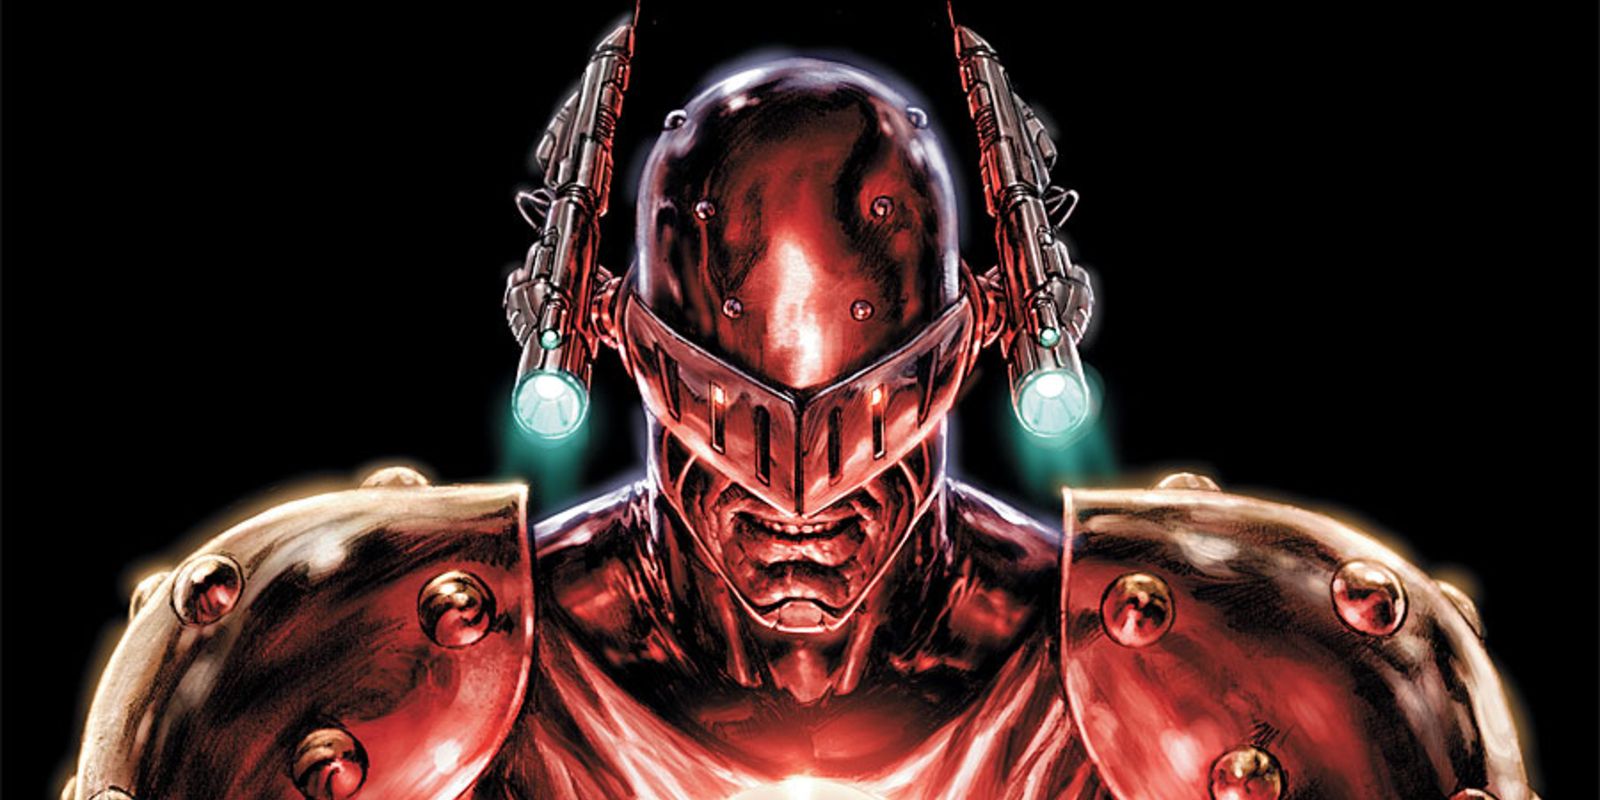 Prometheus as seen in DC Comics